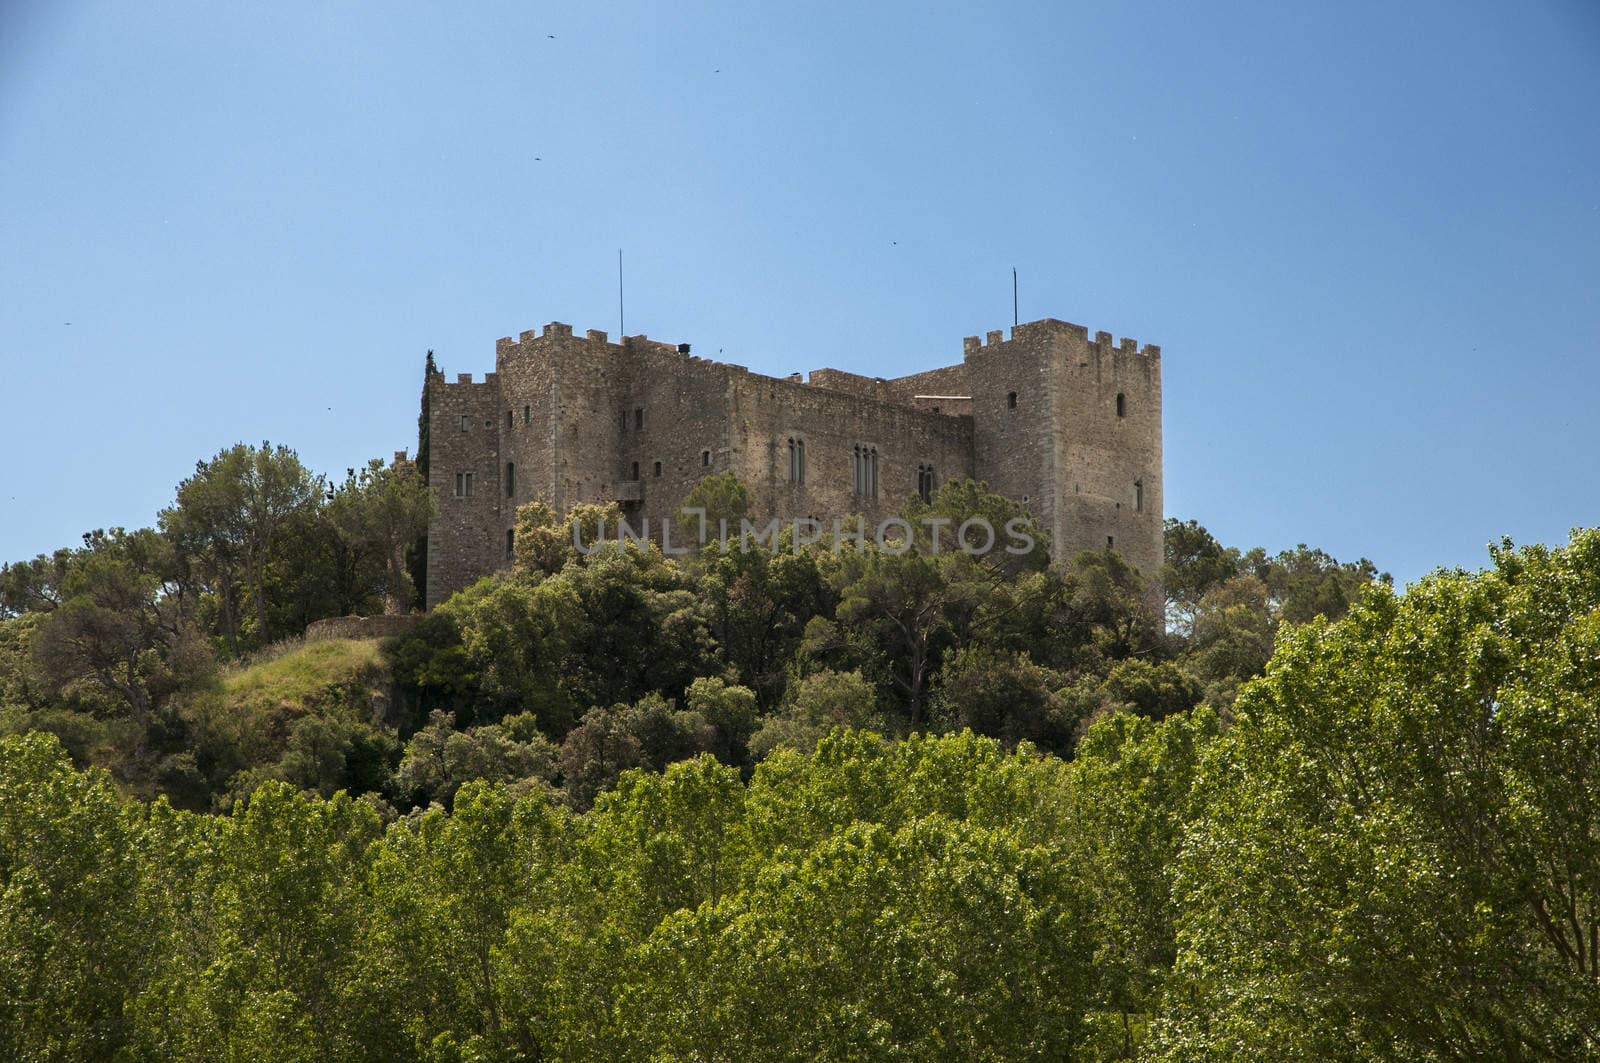 castle La Roca Del Valles located on top of the mountain